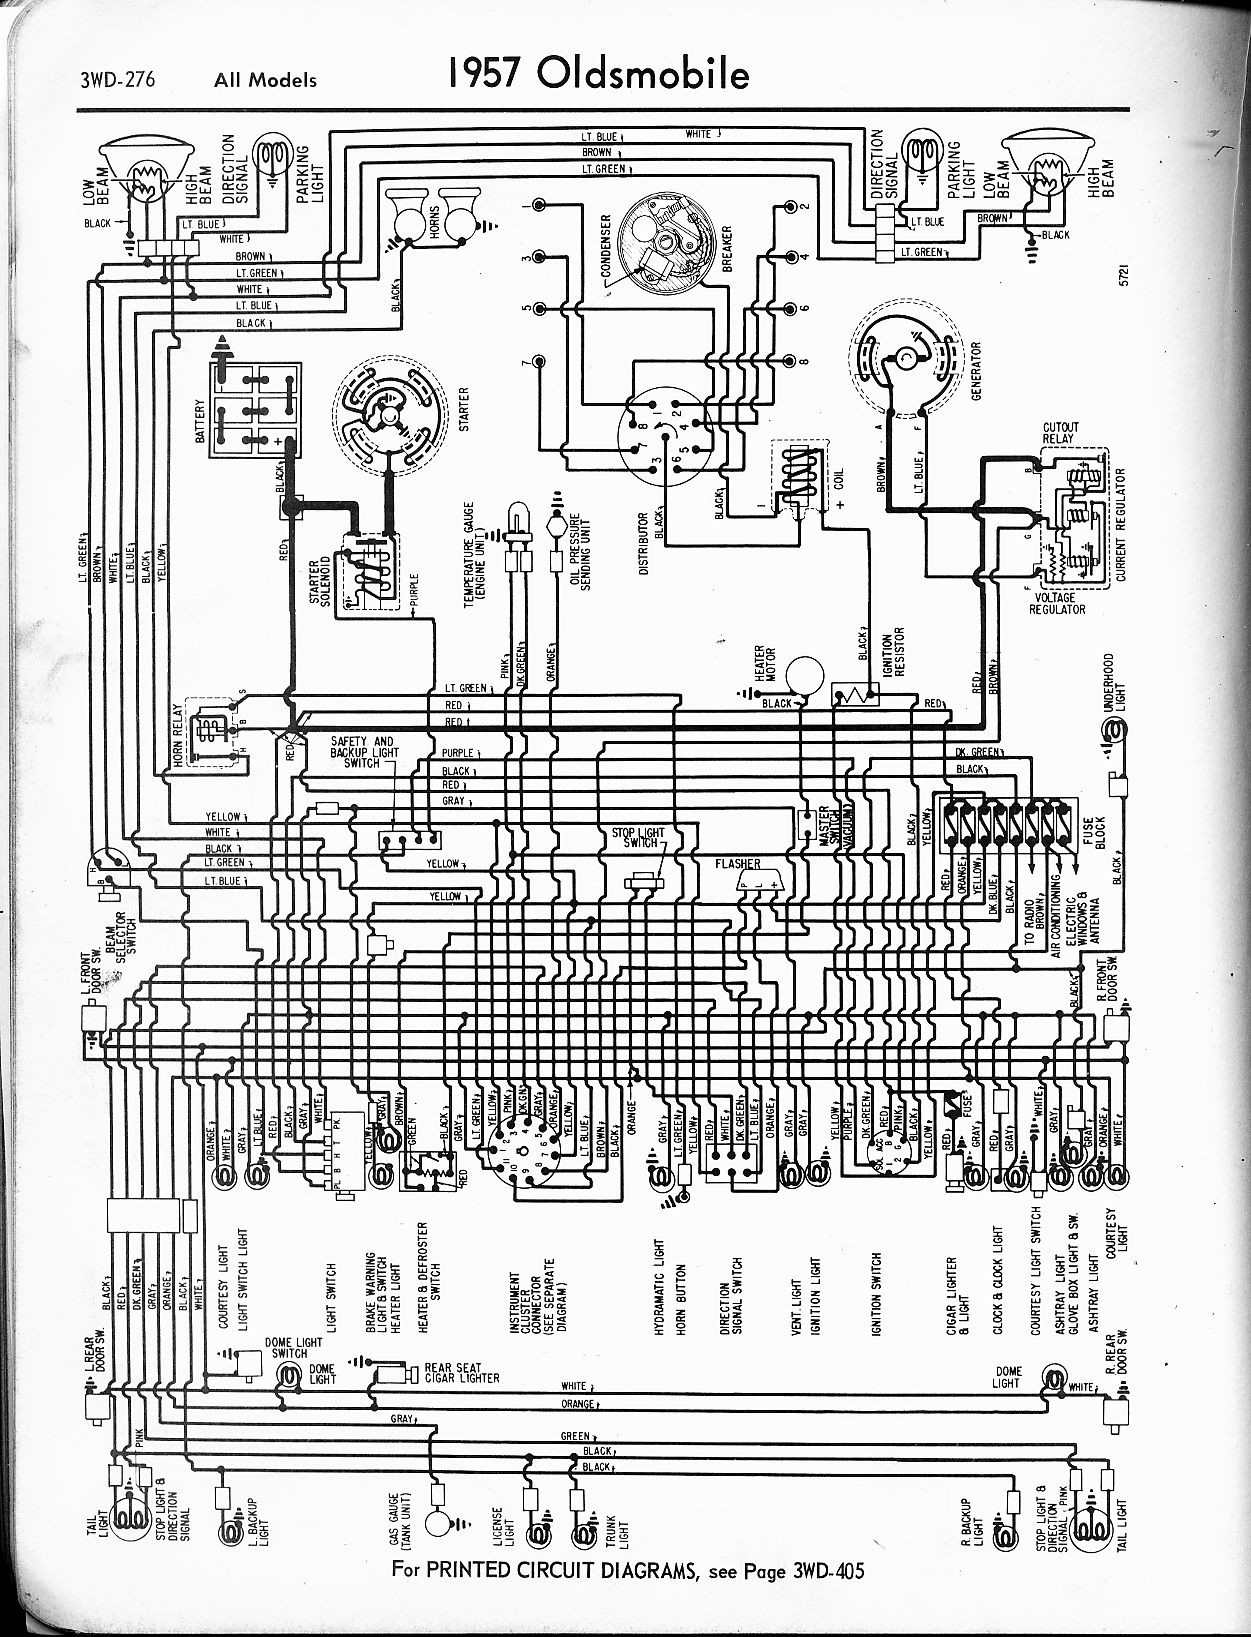 Oldsmobile wiring diagrams